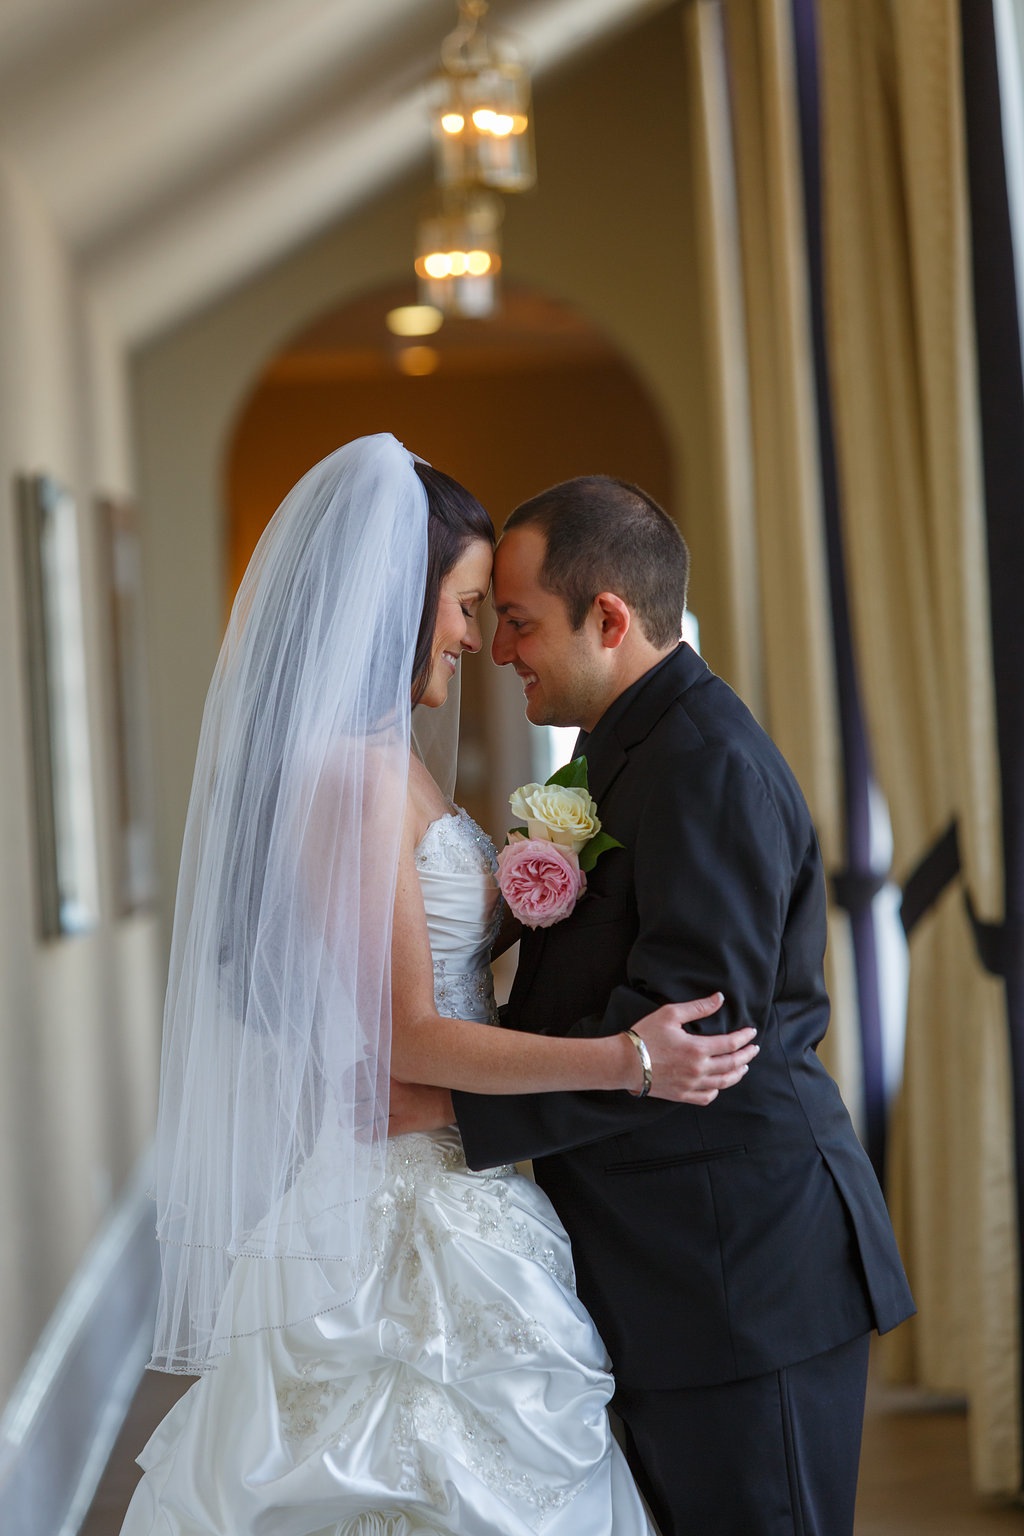 Pink, Disney Inspired Wedding - Don CeSar Wedding in St. Pete Beach, Fl - St. Petersburg Wedding Photographer Aaron Lockwood Photography (16)